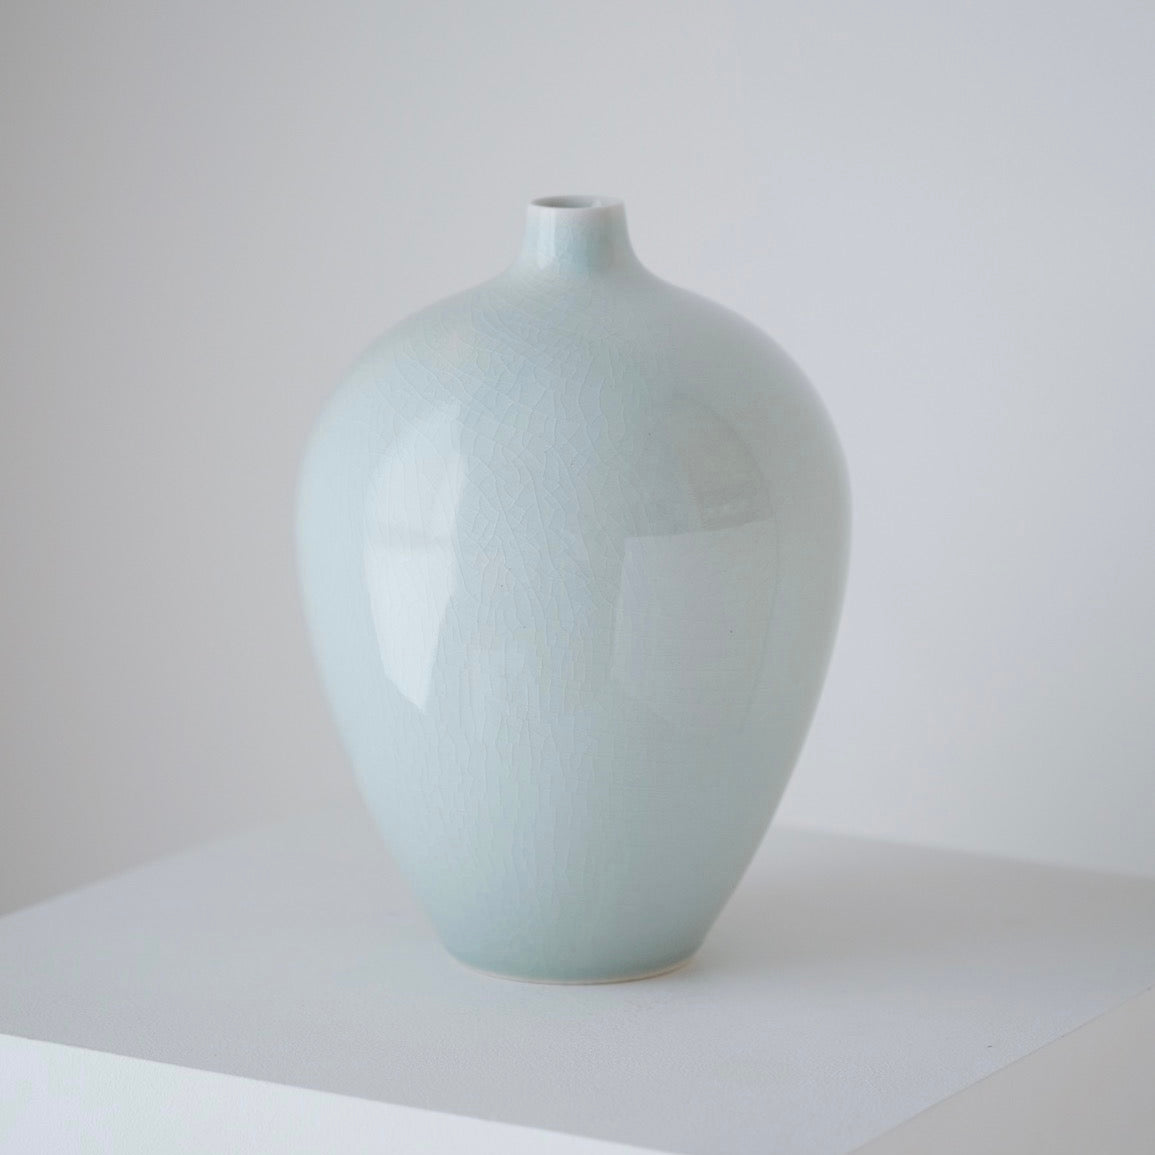 Light-Chungja(연청자) Vase - Tall